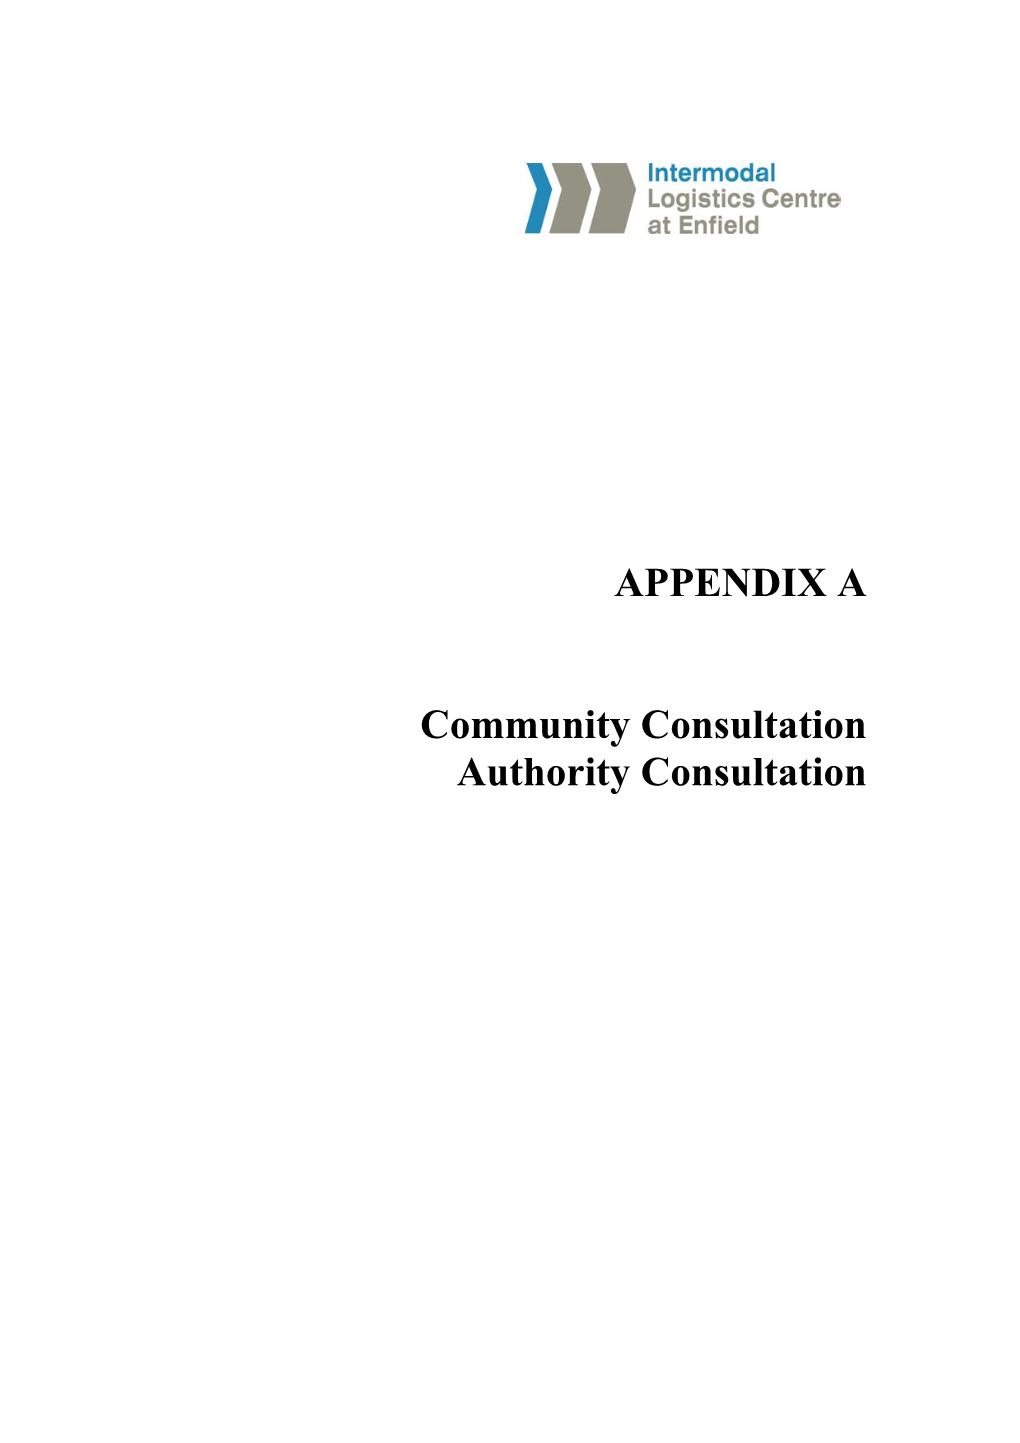 APPENDIX a Community Consultation Authority Consultation